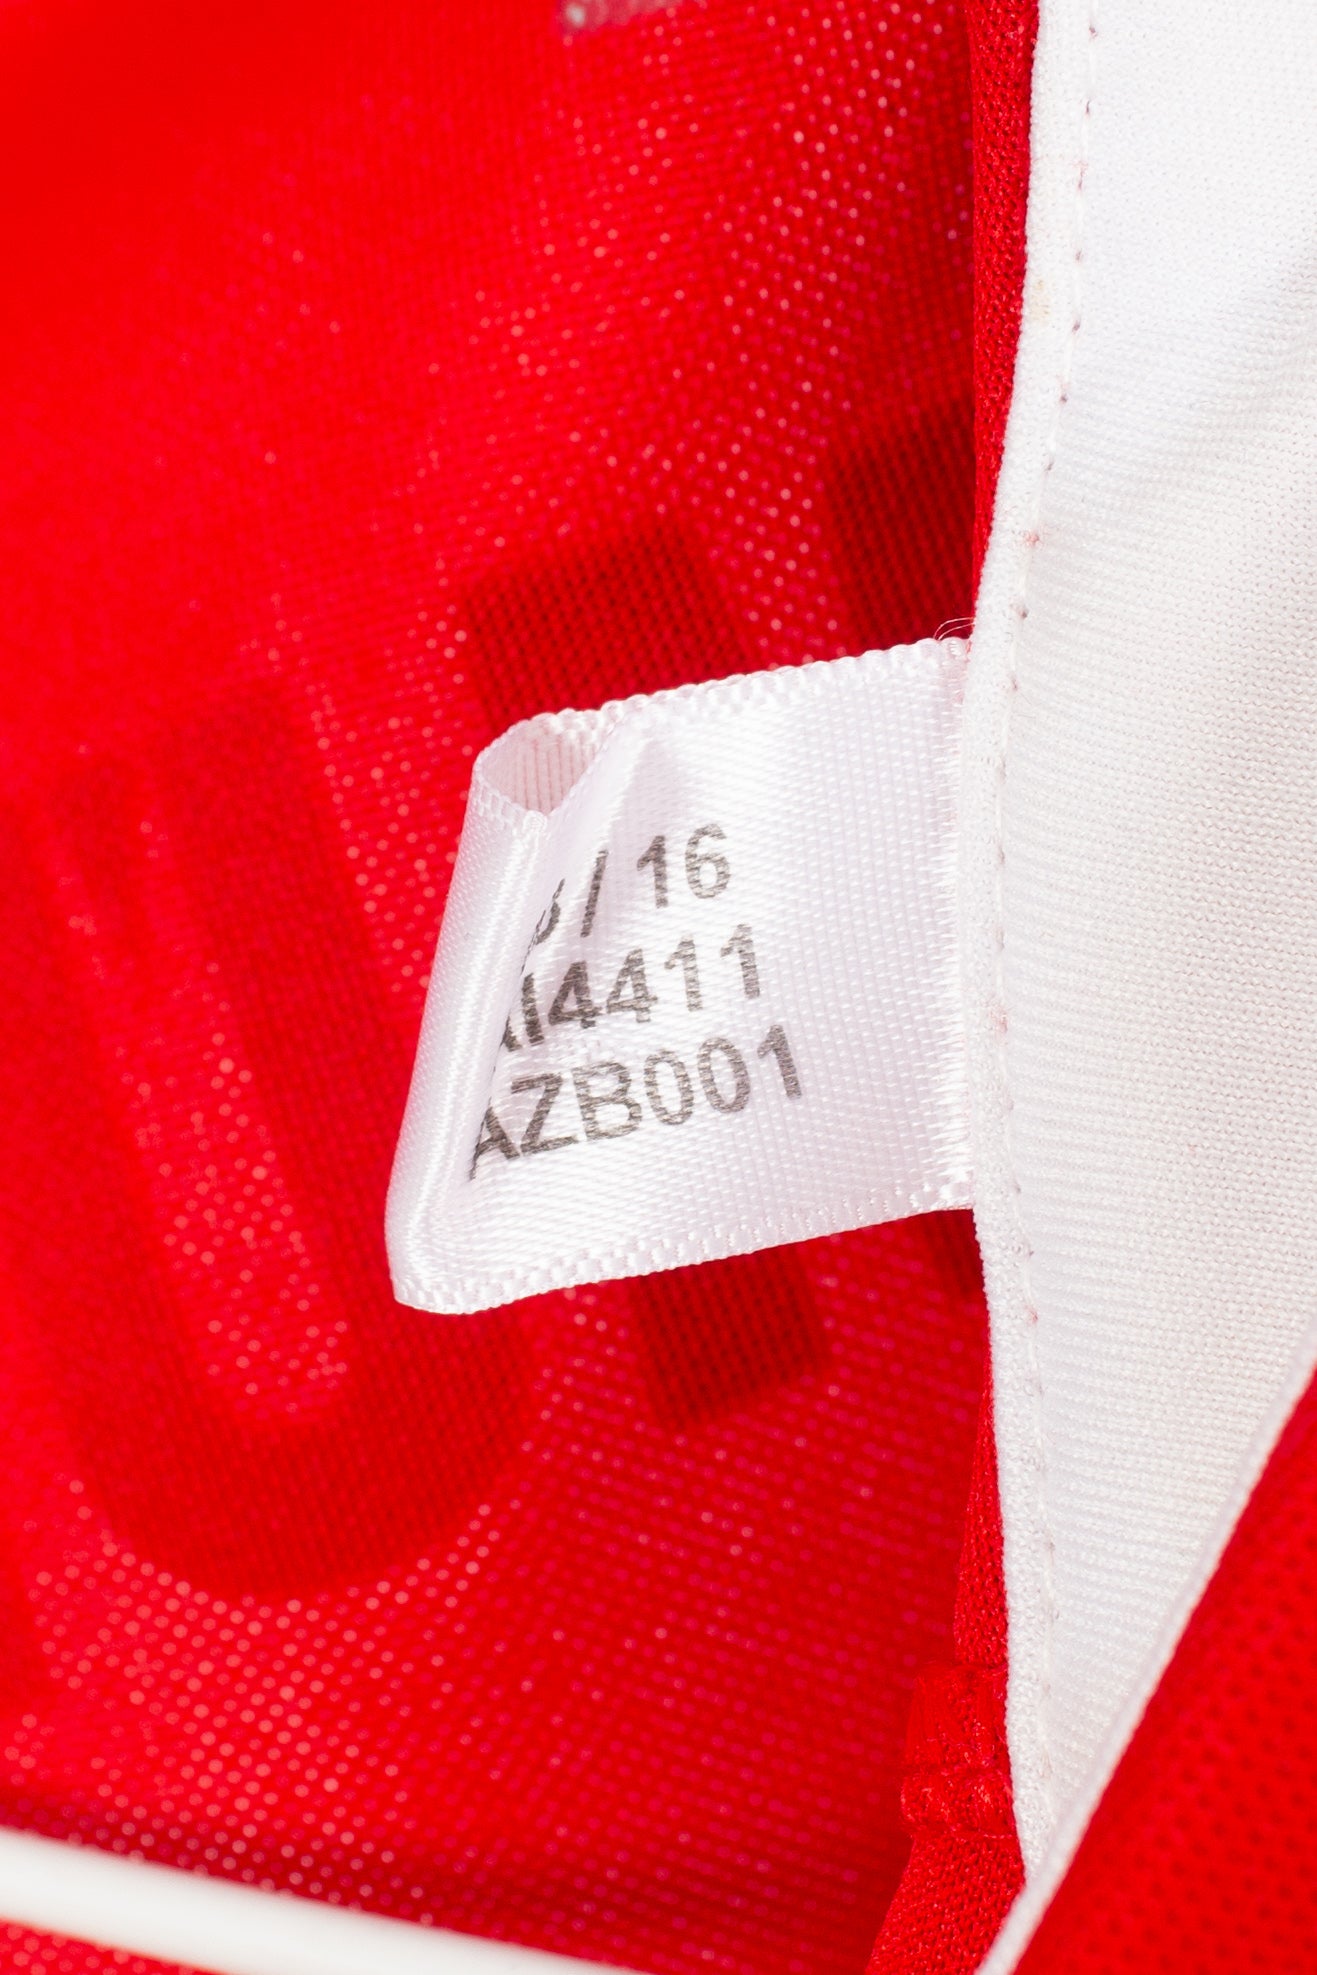 Bayern Munich 2016/17 Home Shirt (XL)